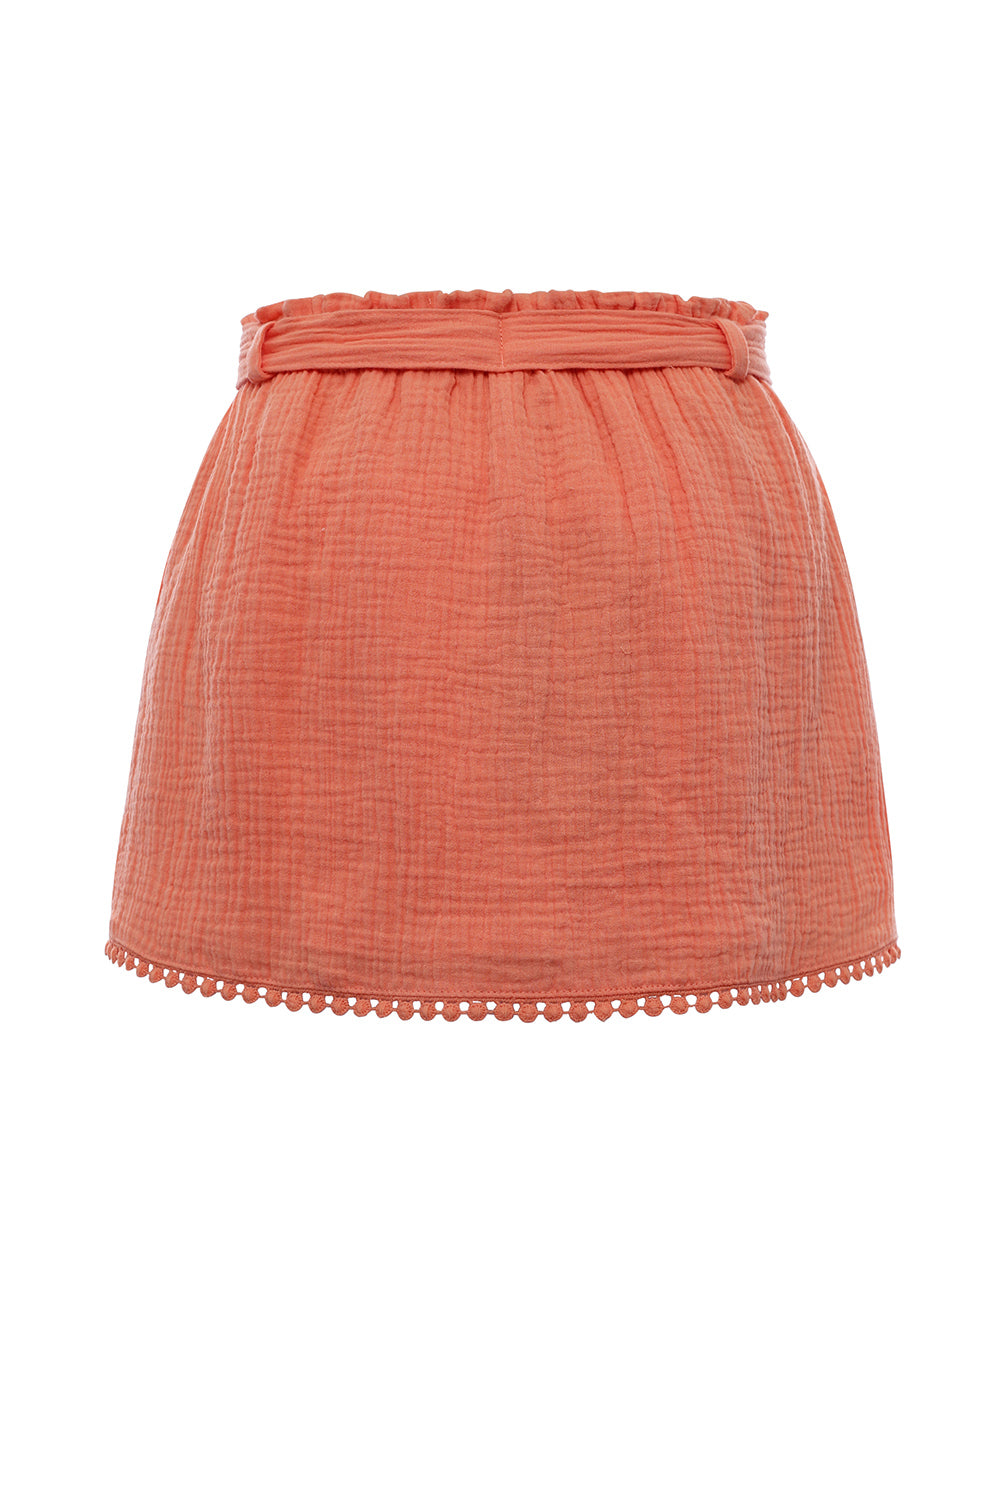 LOOXS Little Mousseline Skirt